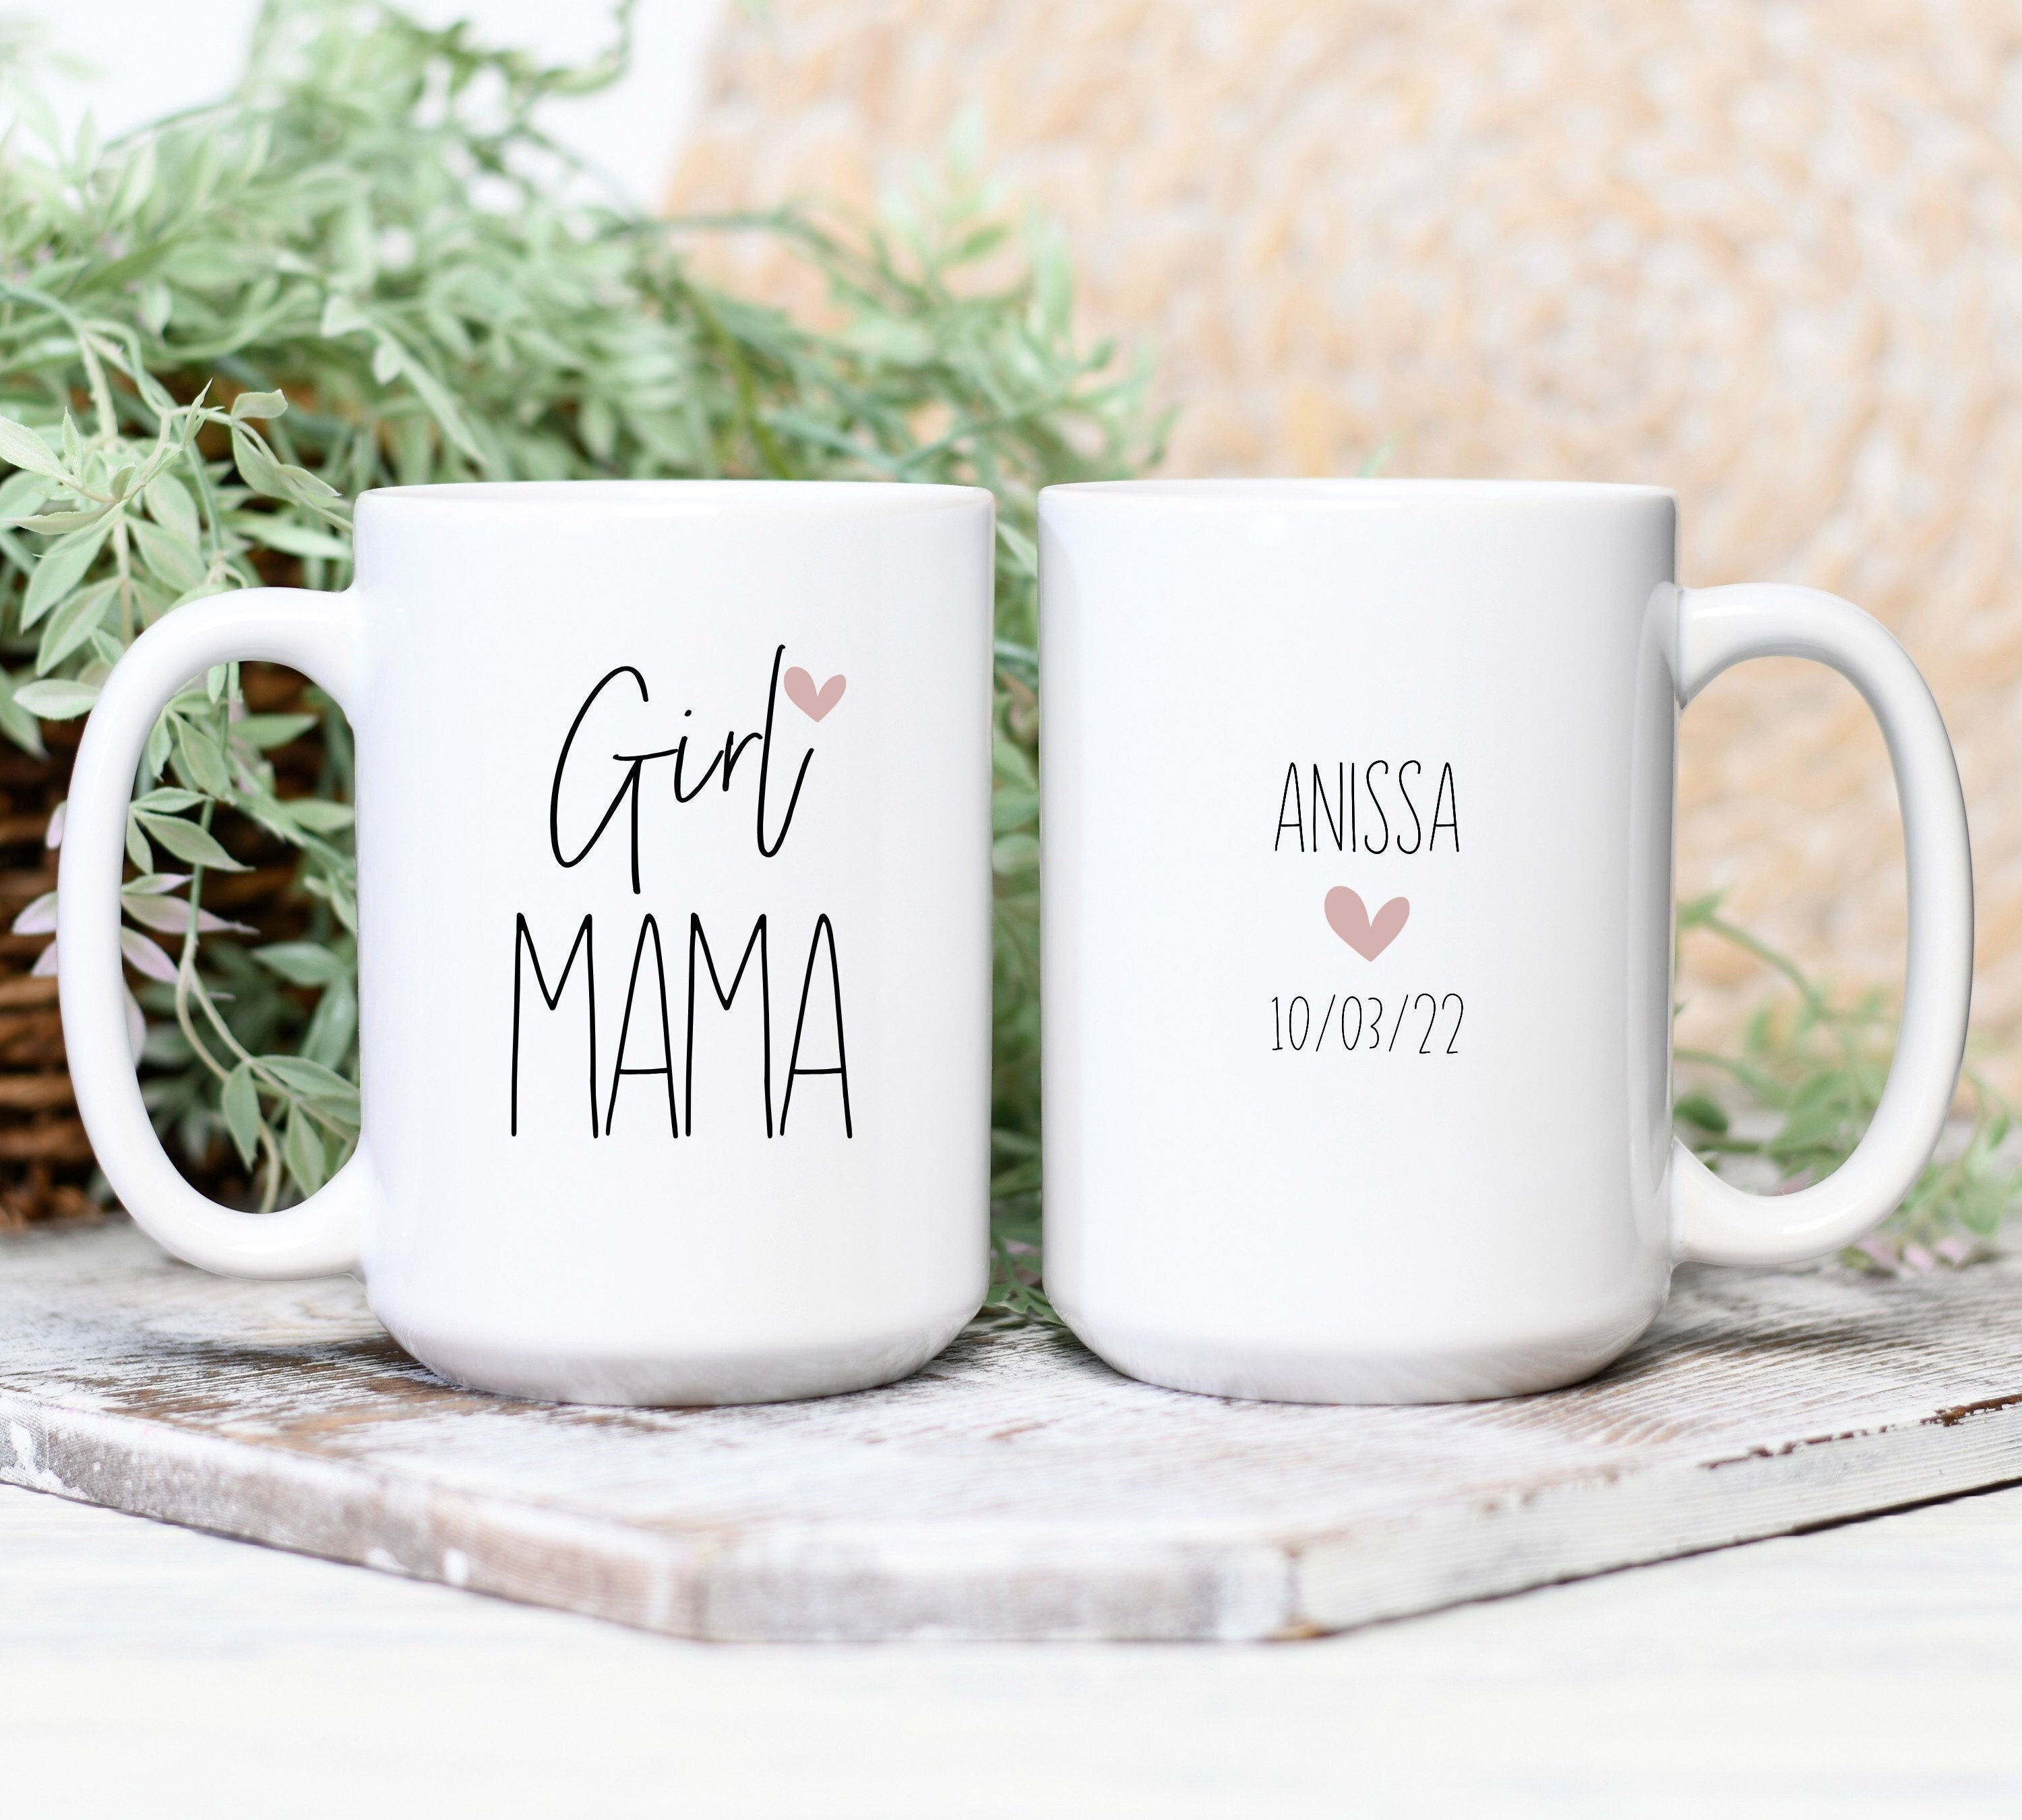 In My Girl Mom Era Coffee Mug, Girl Mom Gifts, Girl Mom Mugs, Girl Mom Era